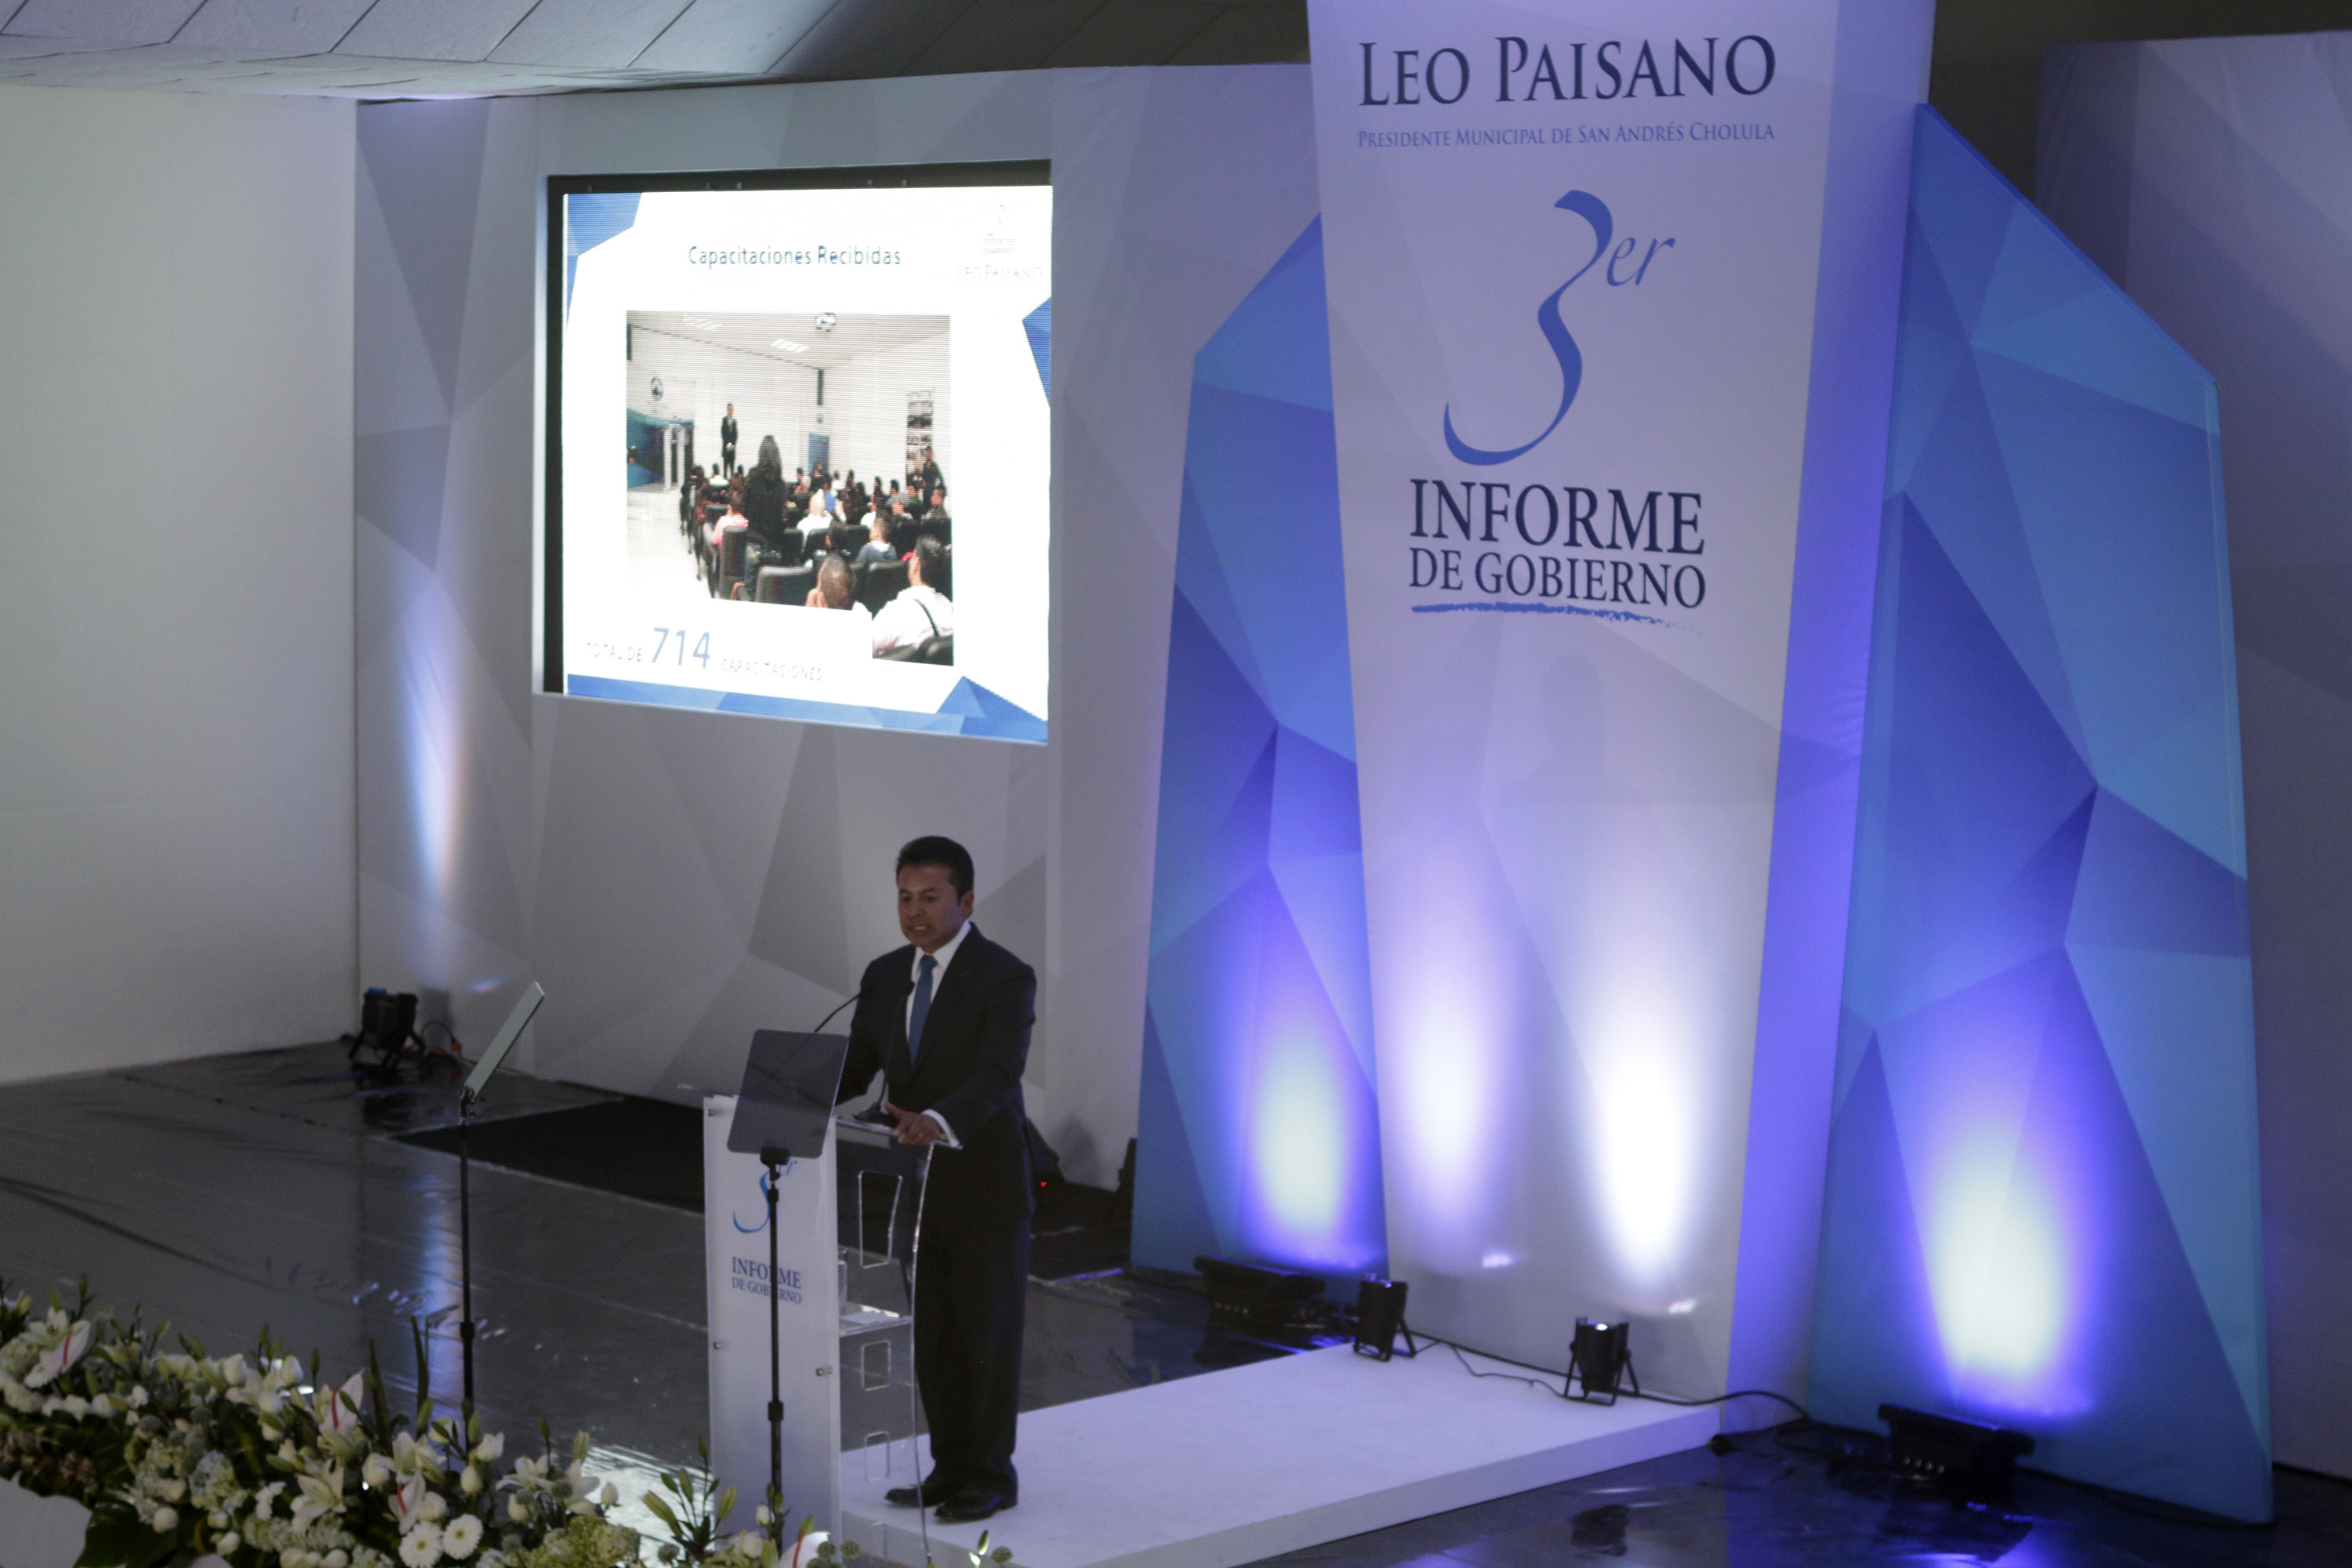 Durante Informe, destaca Leoncio Paisano realización de obra pública